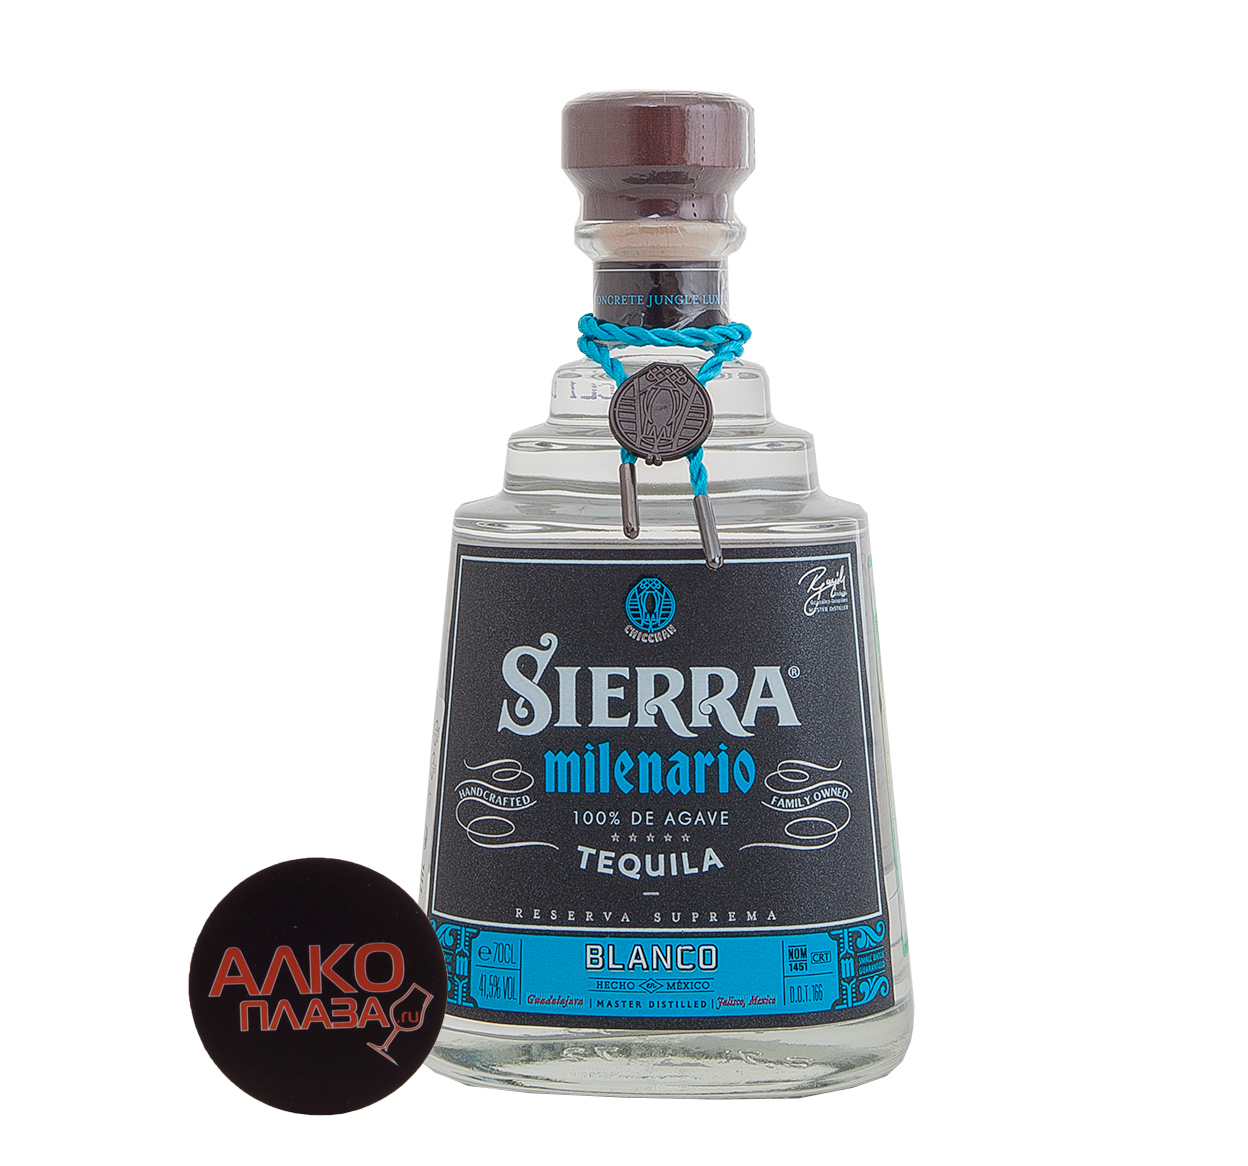 Tequila Sierra milenario Blanco - текила Сиерра Миленарио Бланко 100% агава 0.7 л